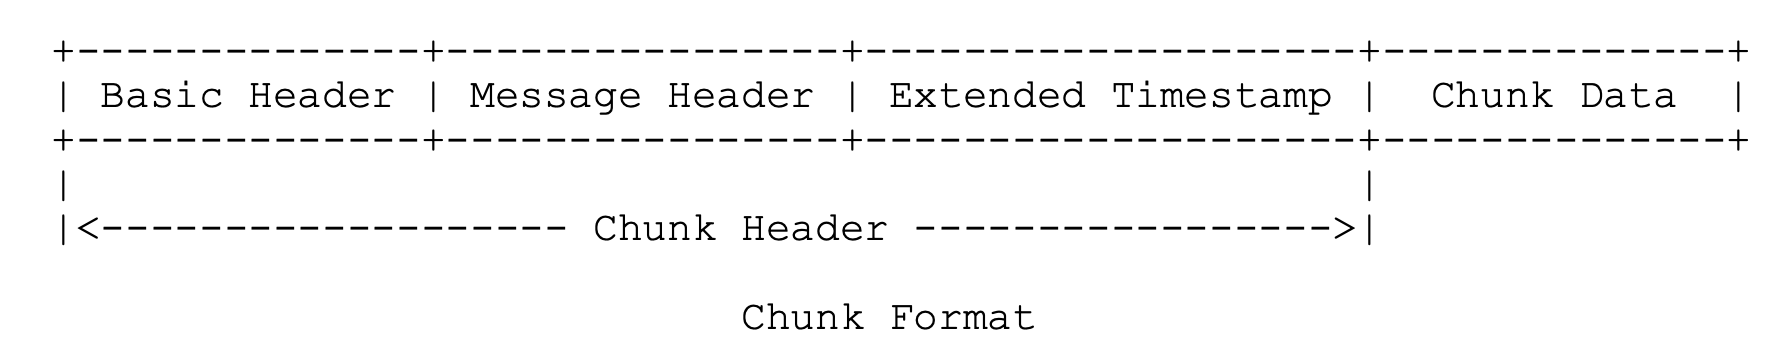 Chunk Format